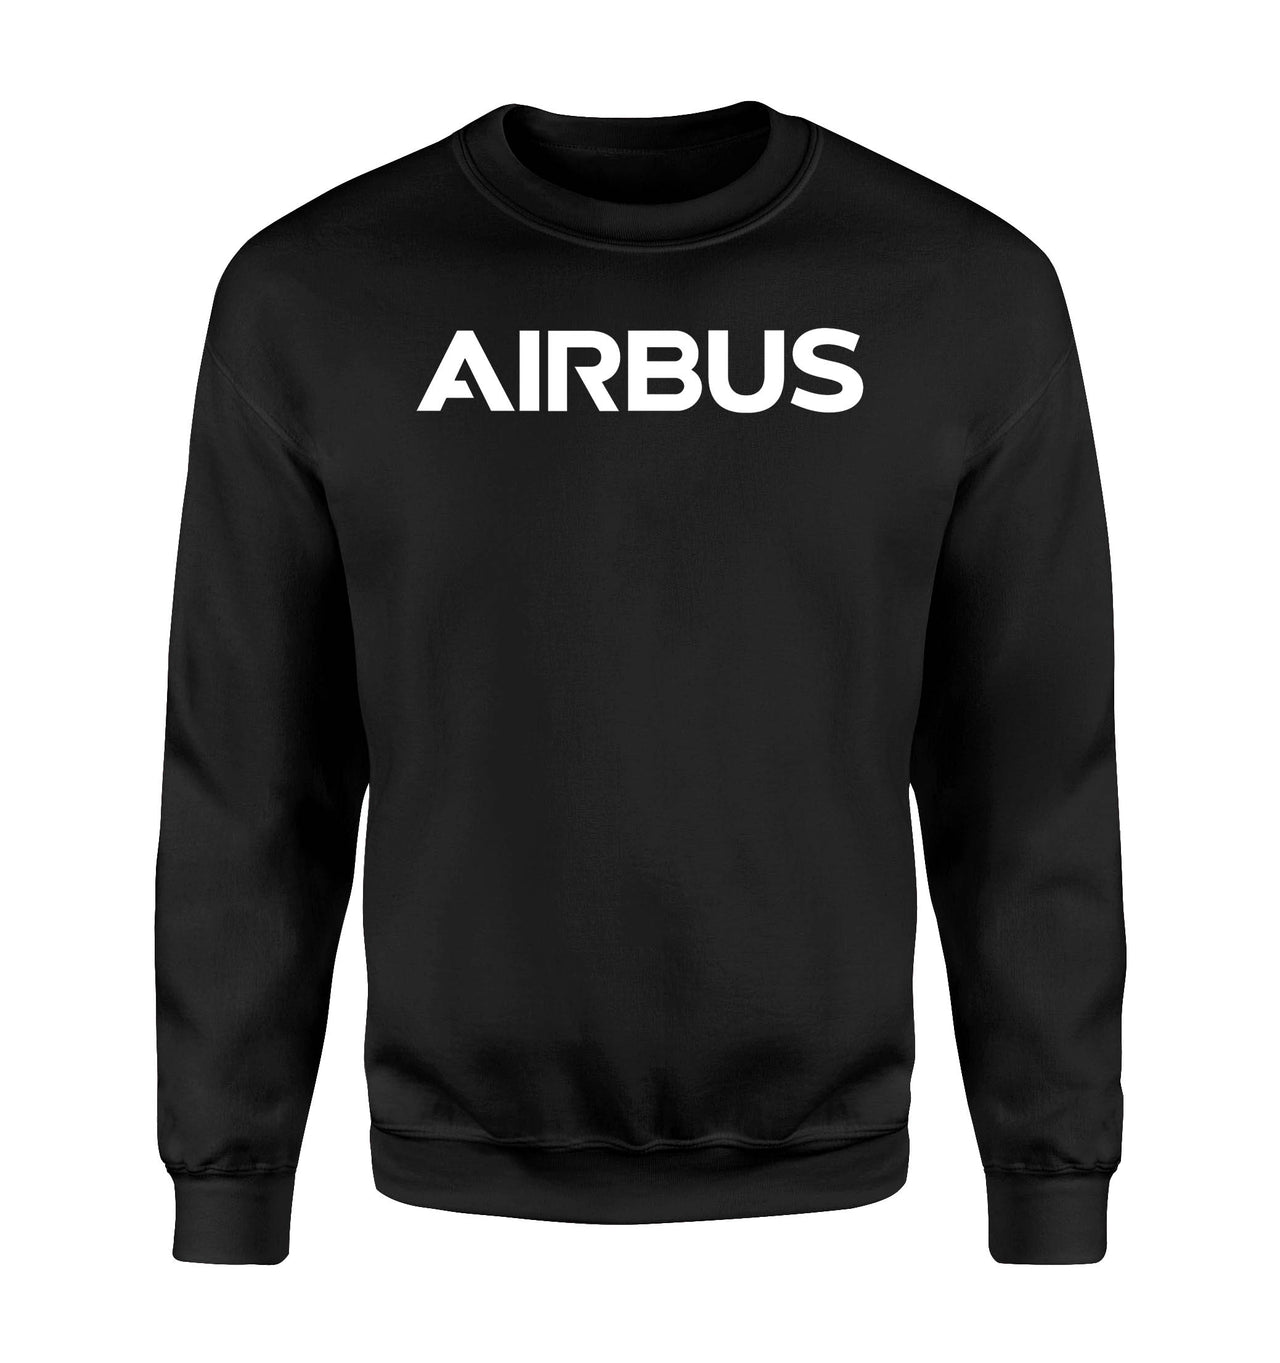 Airbus & Text Designed Sweatshirts